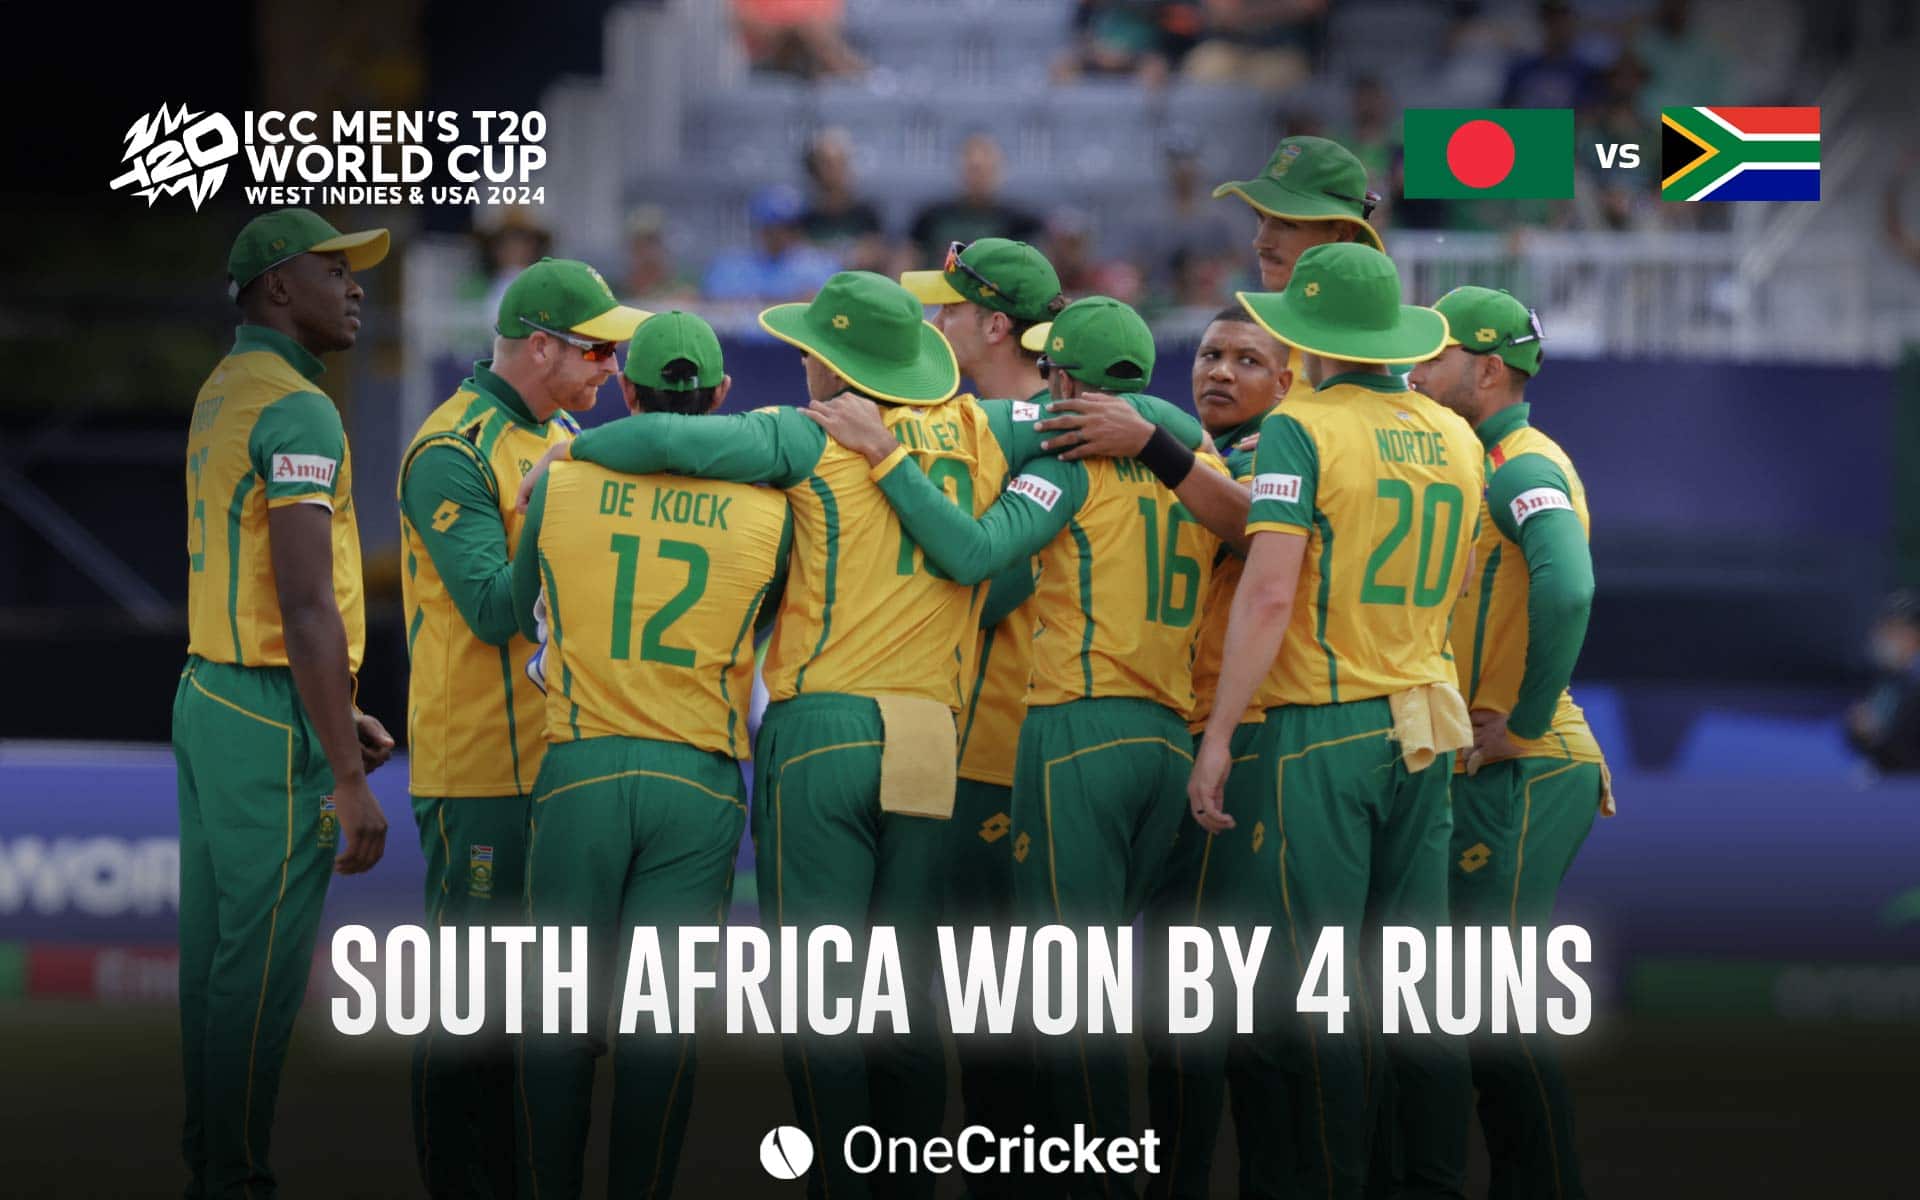 SA win by 4 runs (OneCricket)
